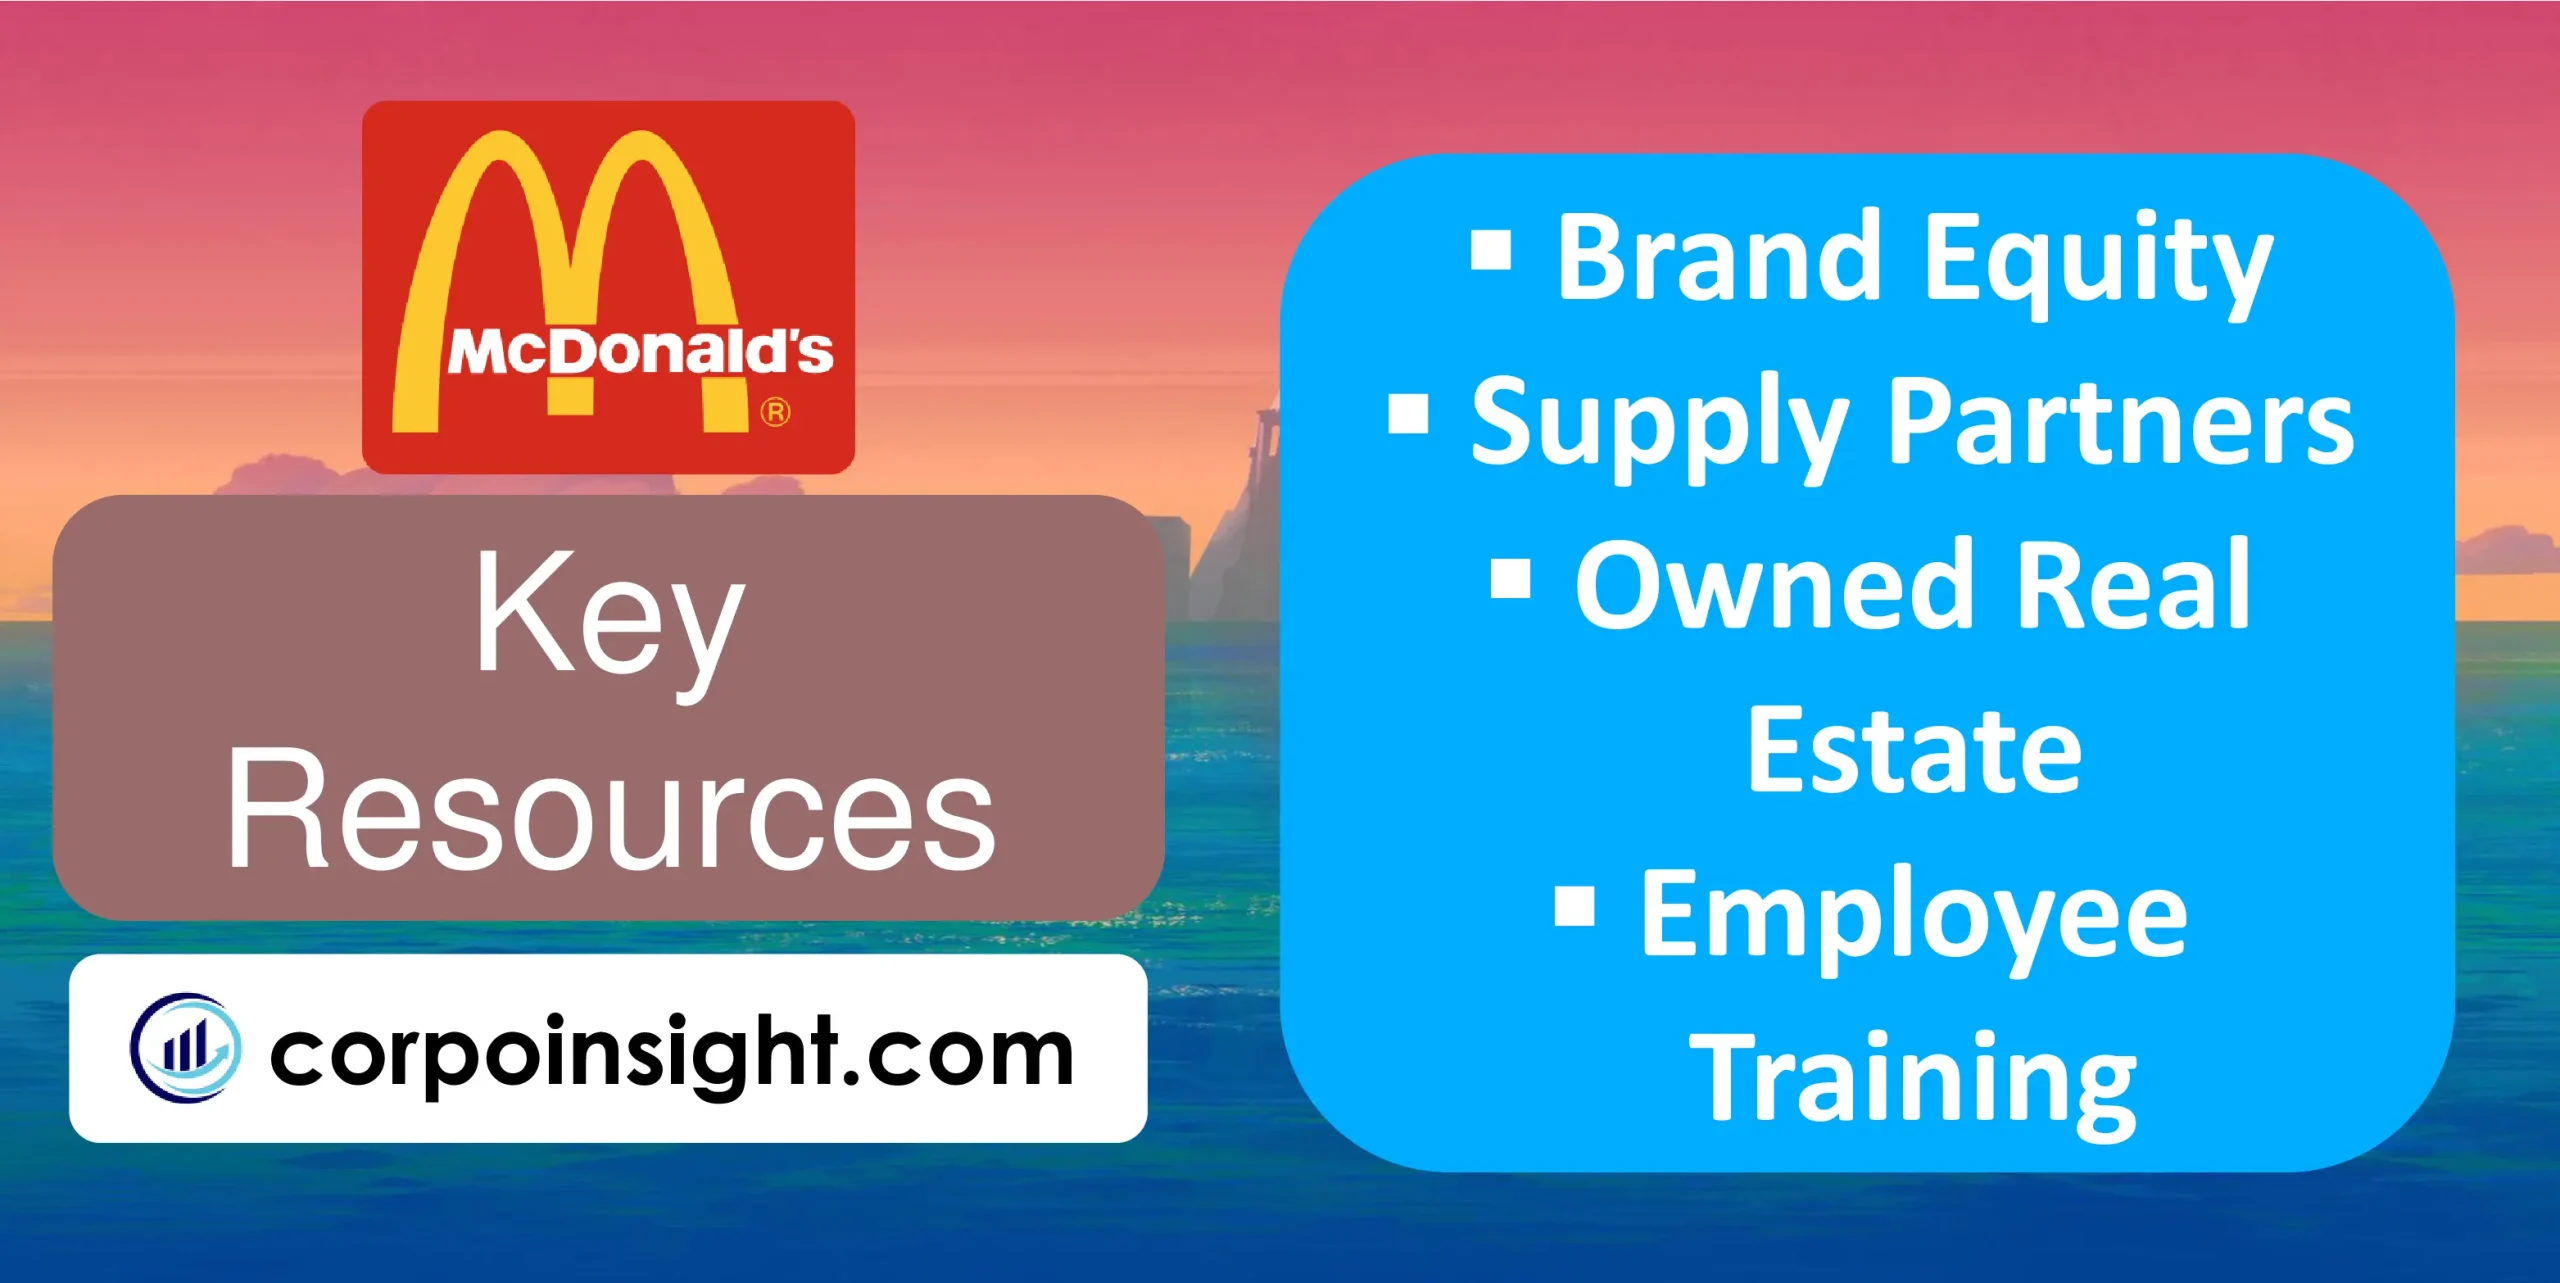 Key Resources of McDonald's